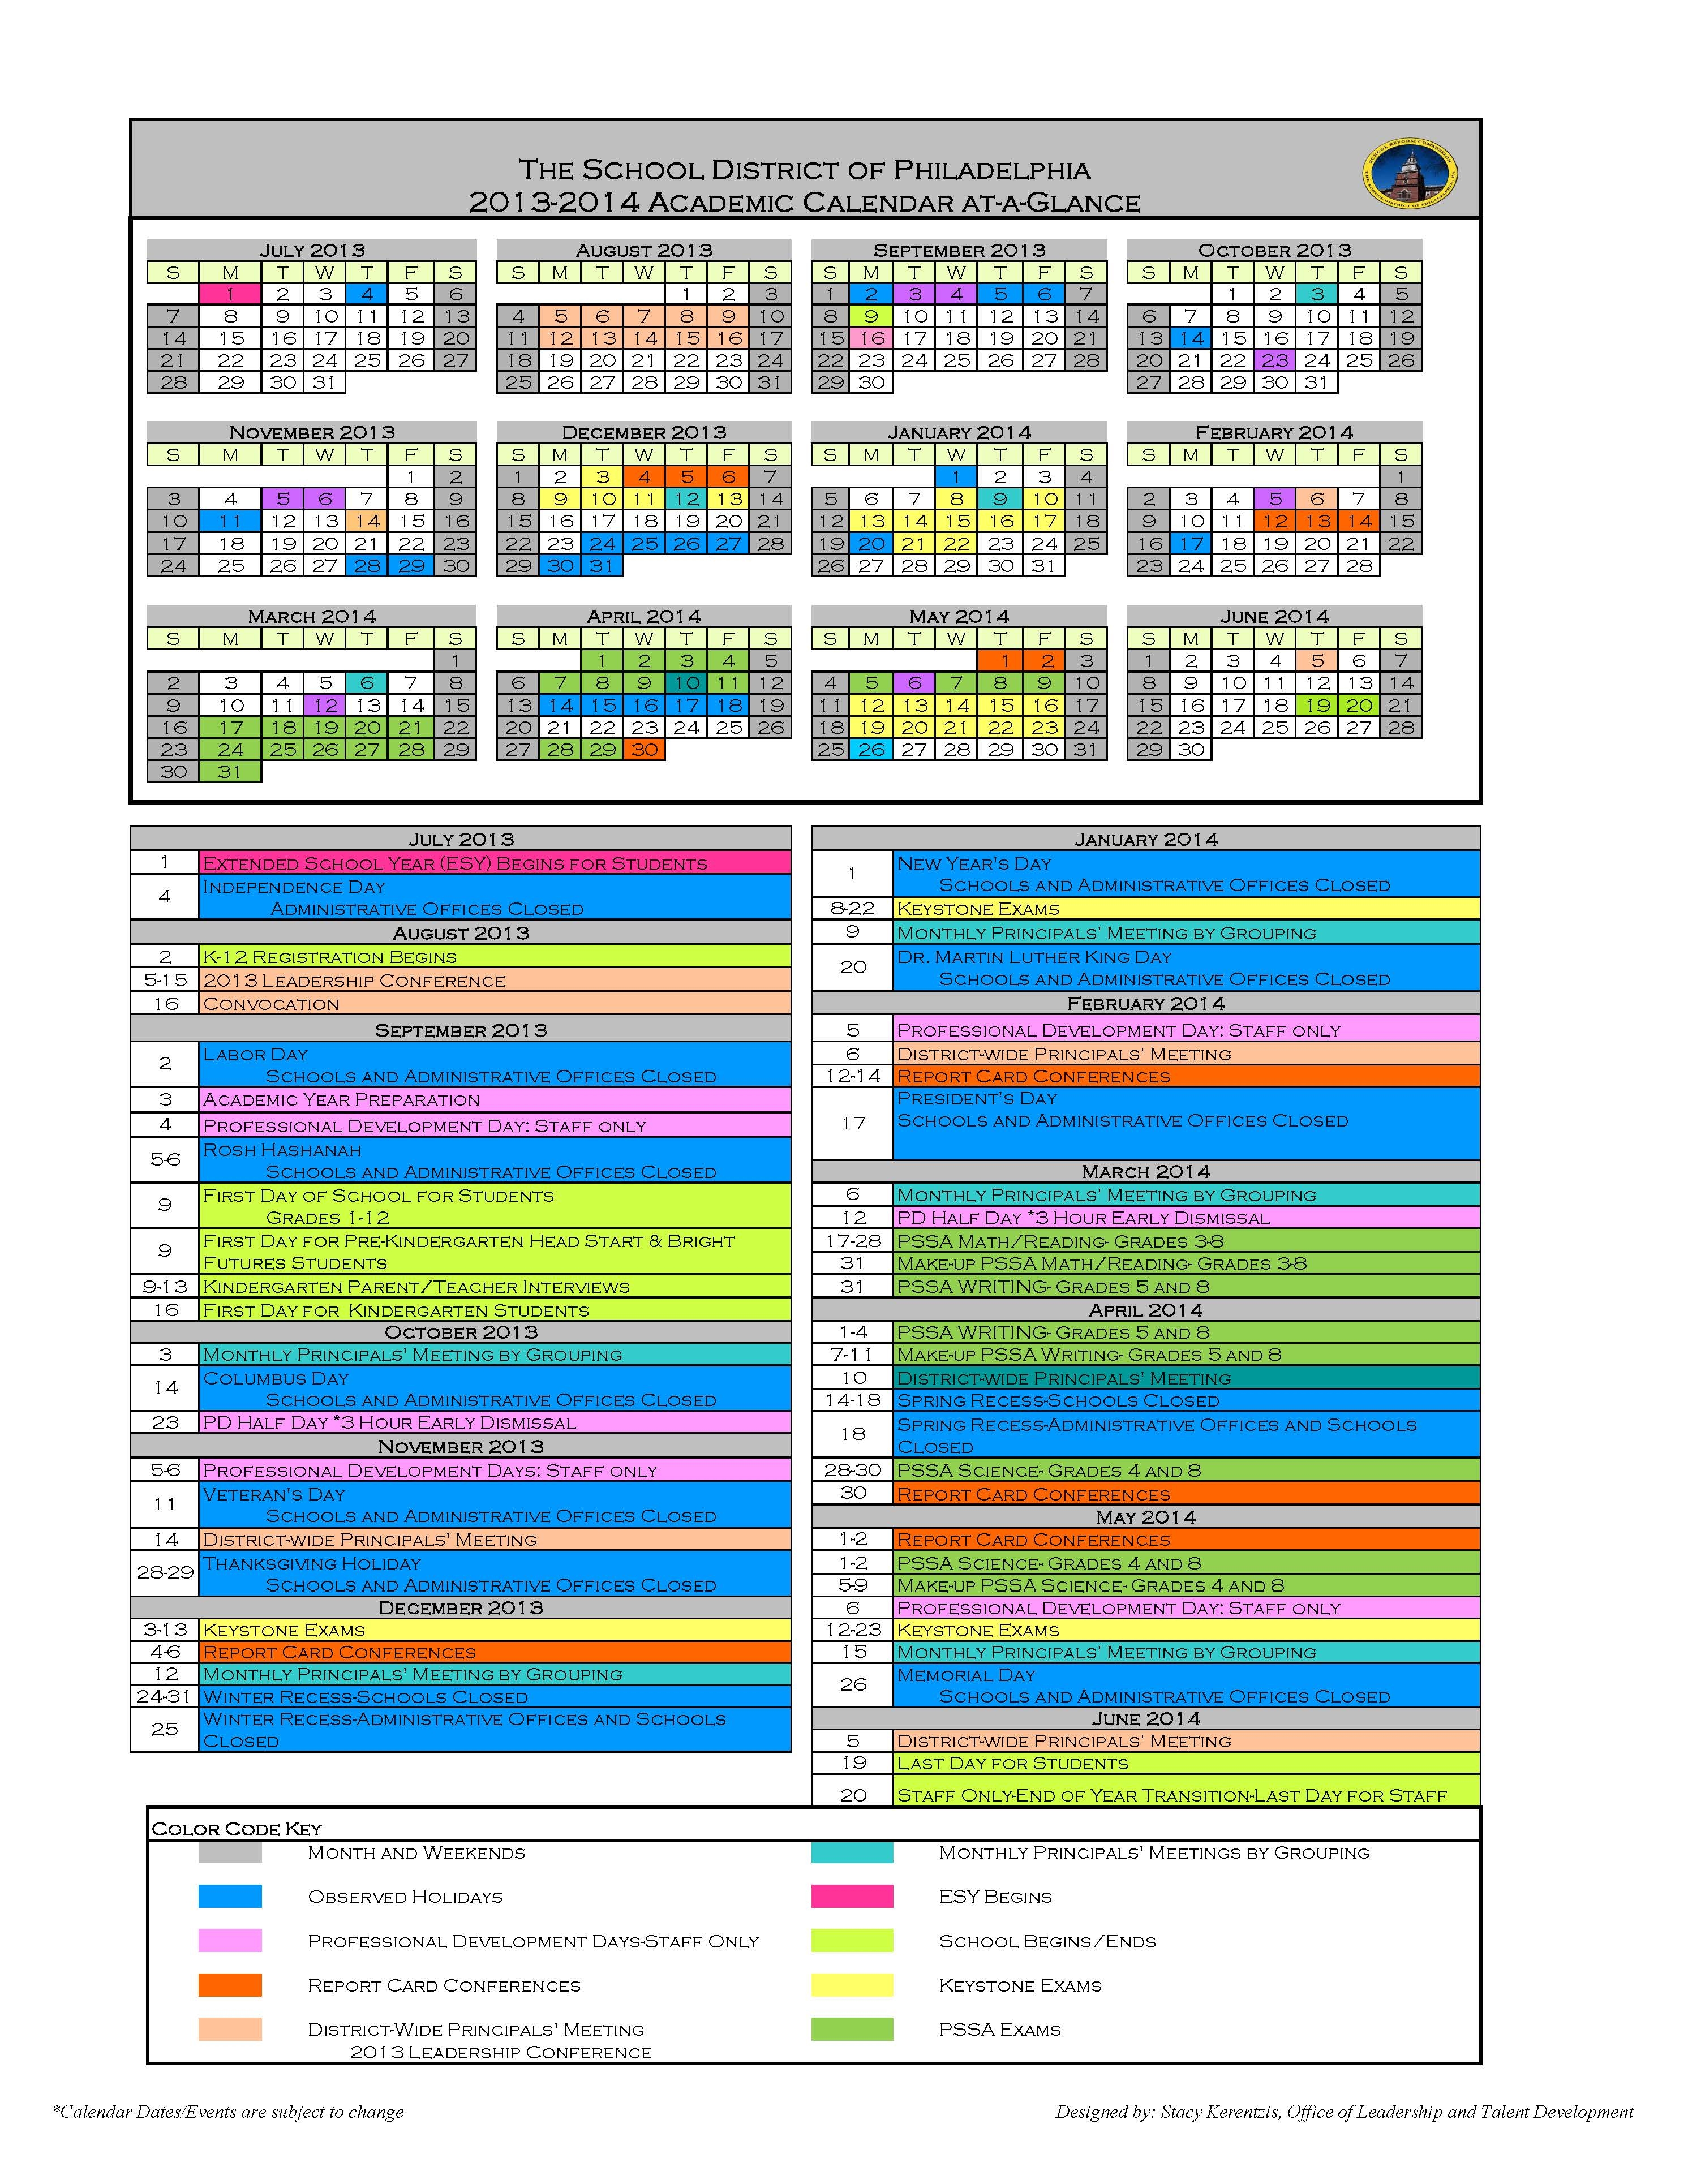 philasd-org-calendar